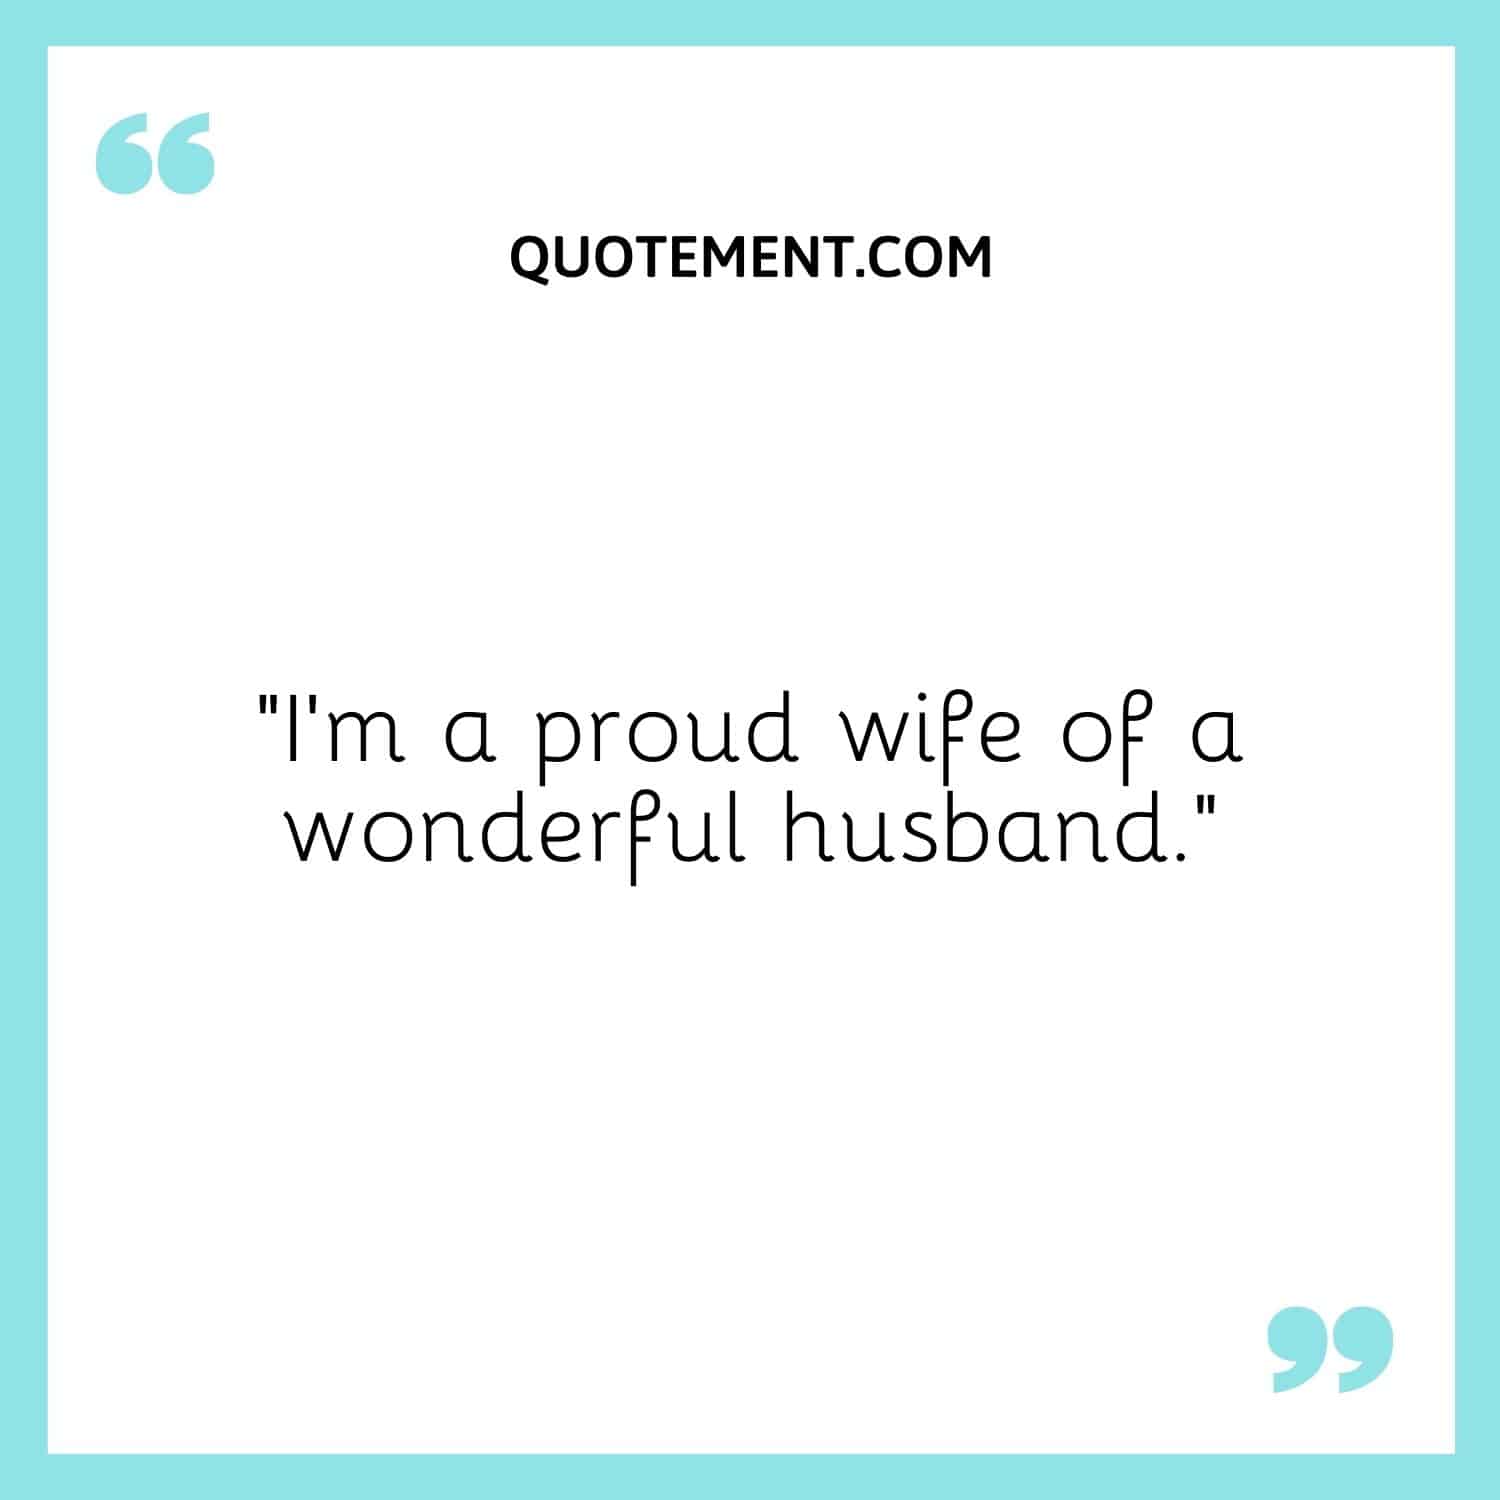 “I’m a proud wife of a wonderful husband.”